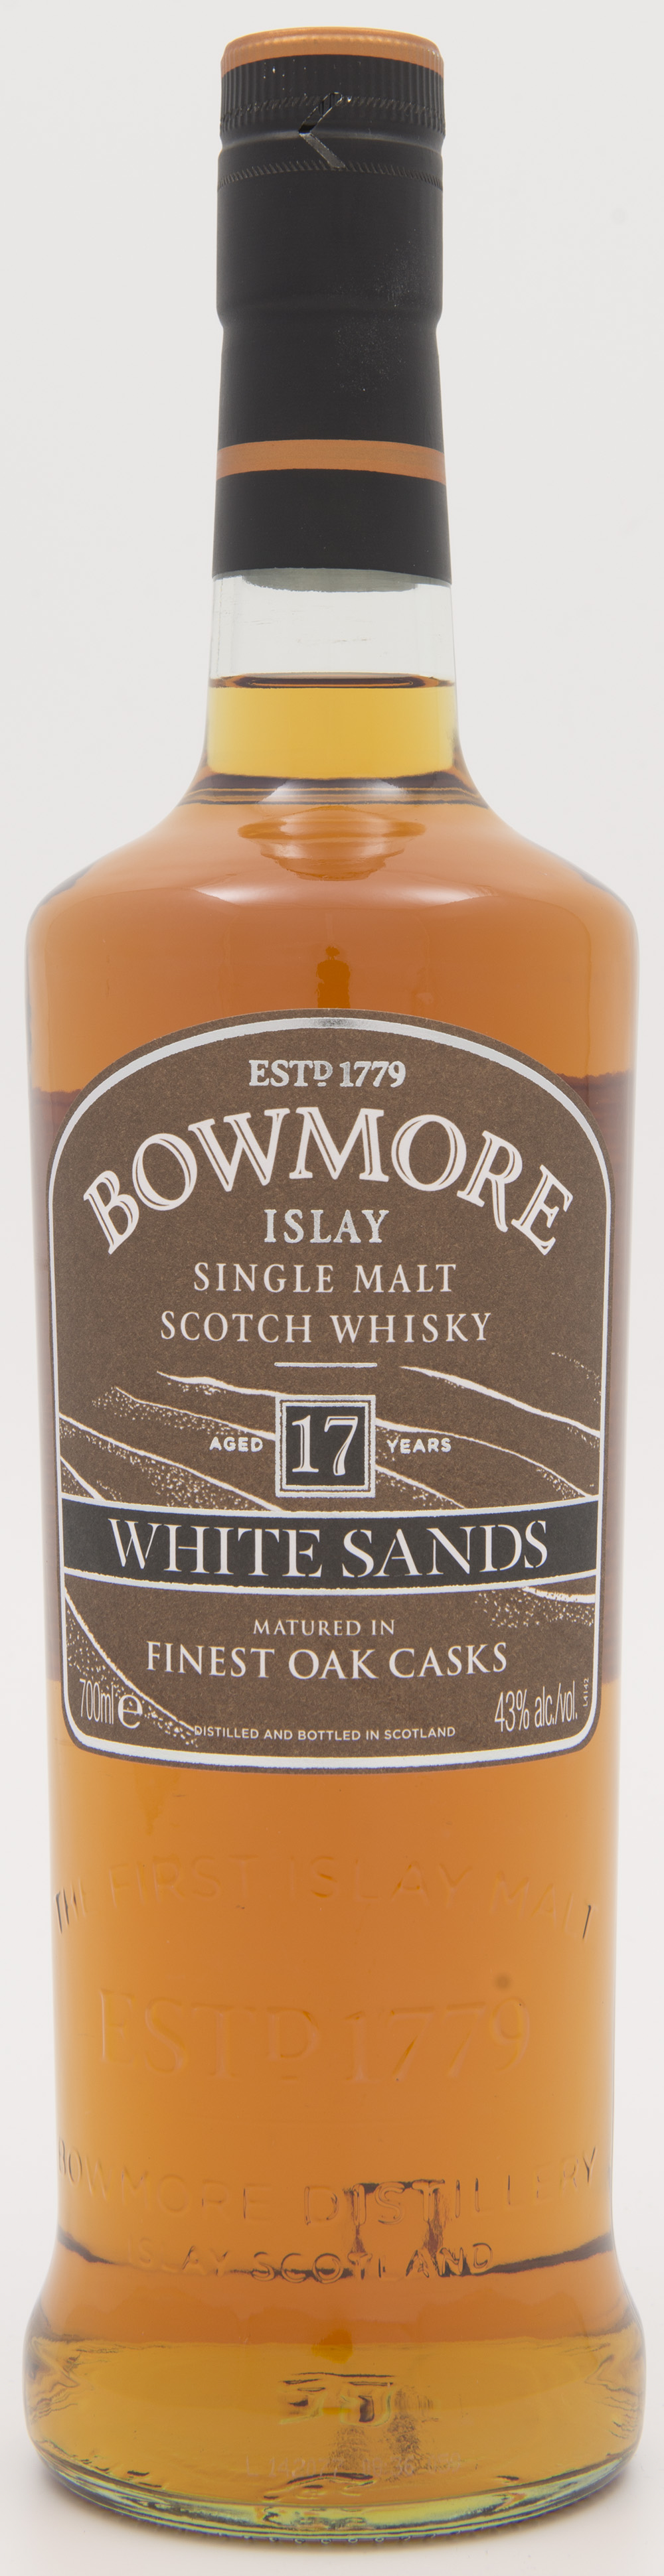 Billede: DSC_3848 Bowmore White Sands 17 - bottle front.jpg